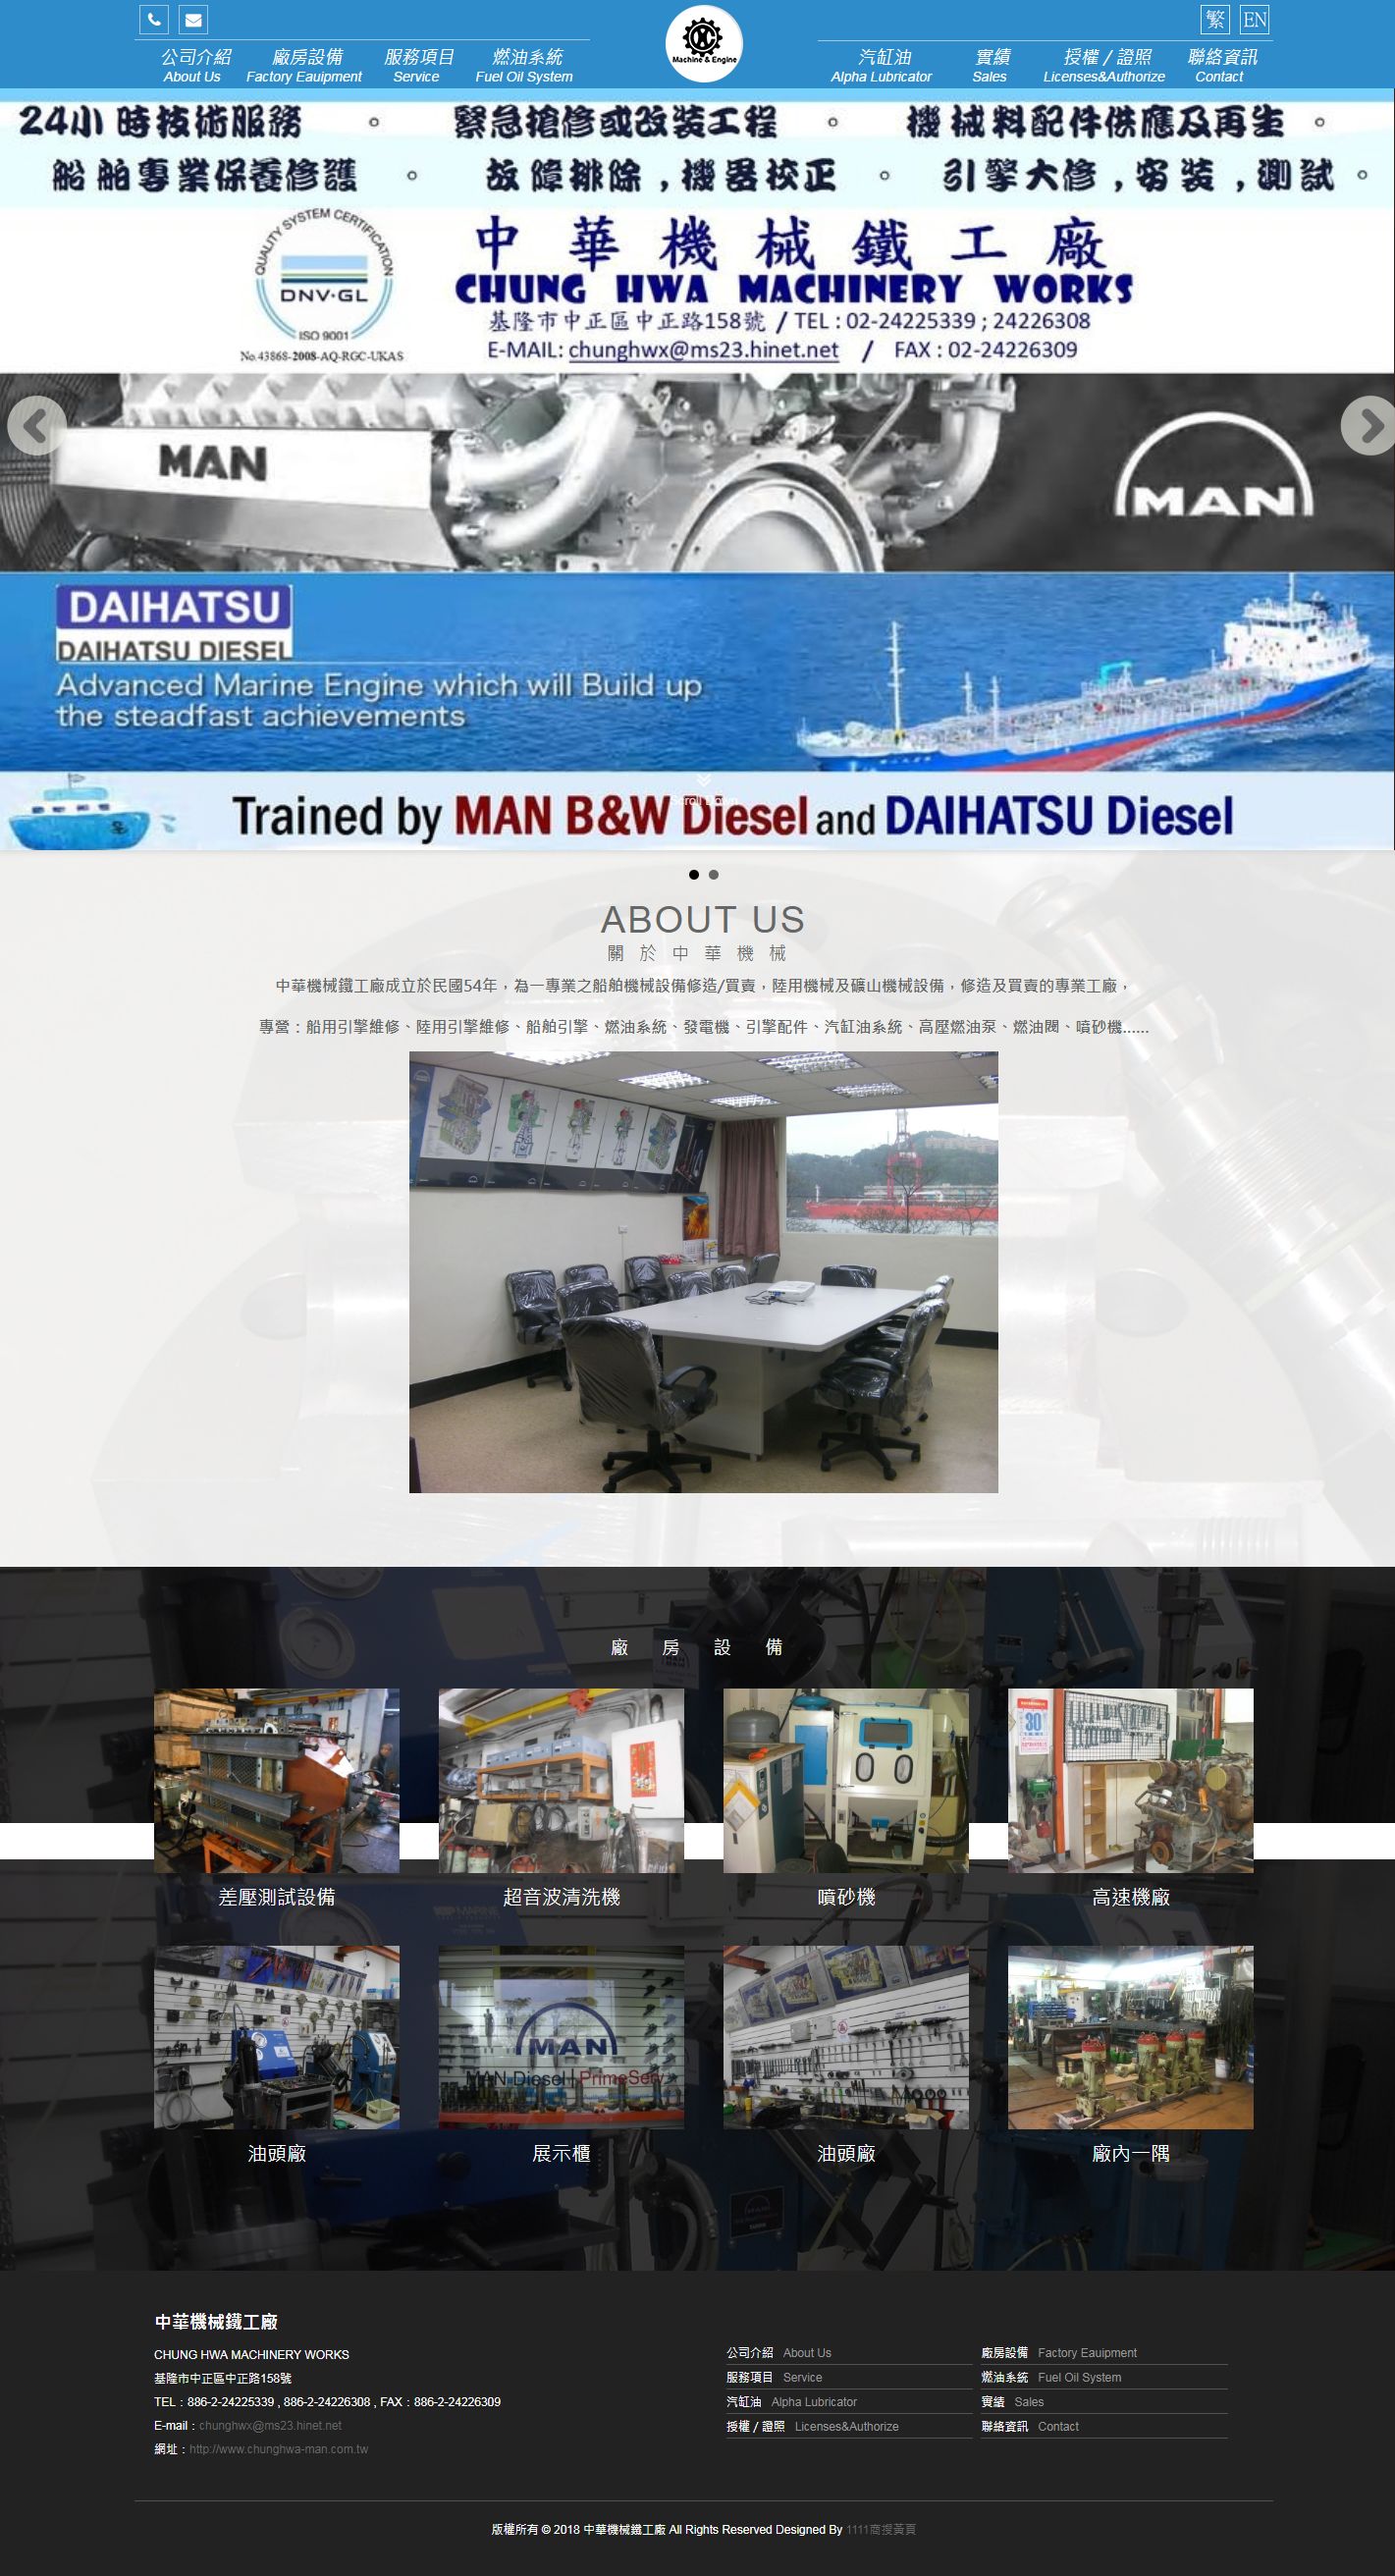 FireShot Pro Screen Capture #006 - '中華機械鐵工廠 CHUNG HWA MACHINERY WORKS' - www_chunghwa-man_com_tw_index_php_web_mainindex.jpg